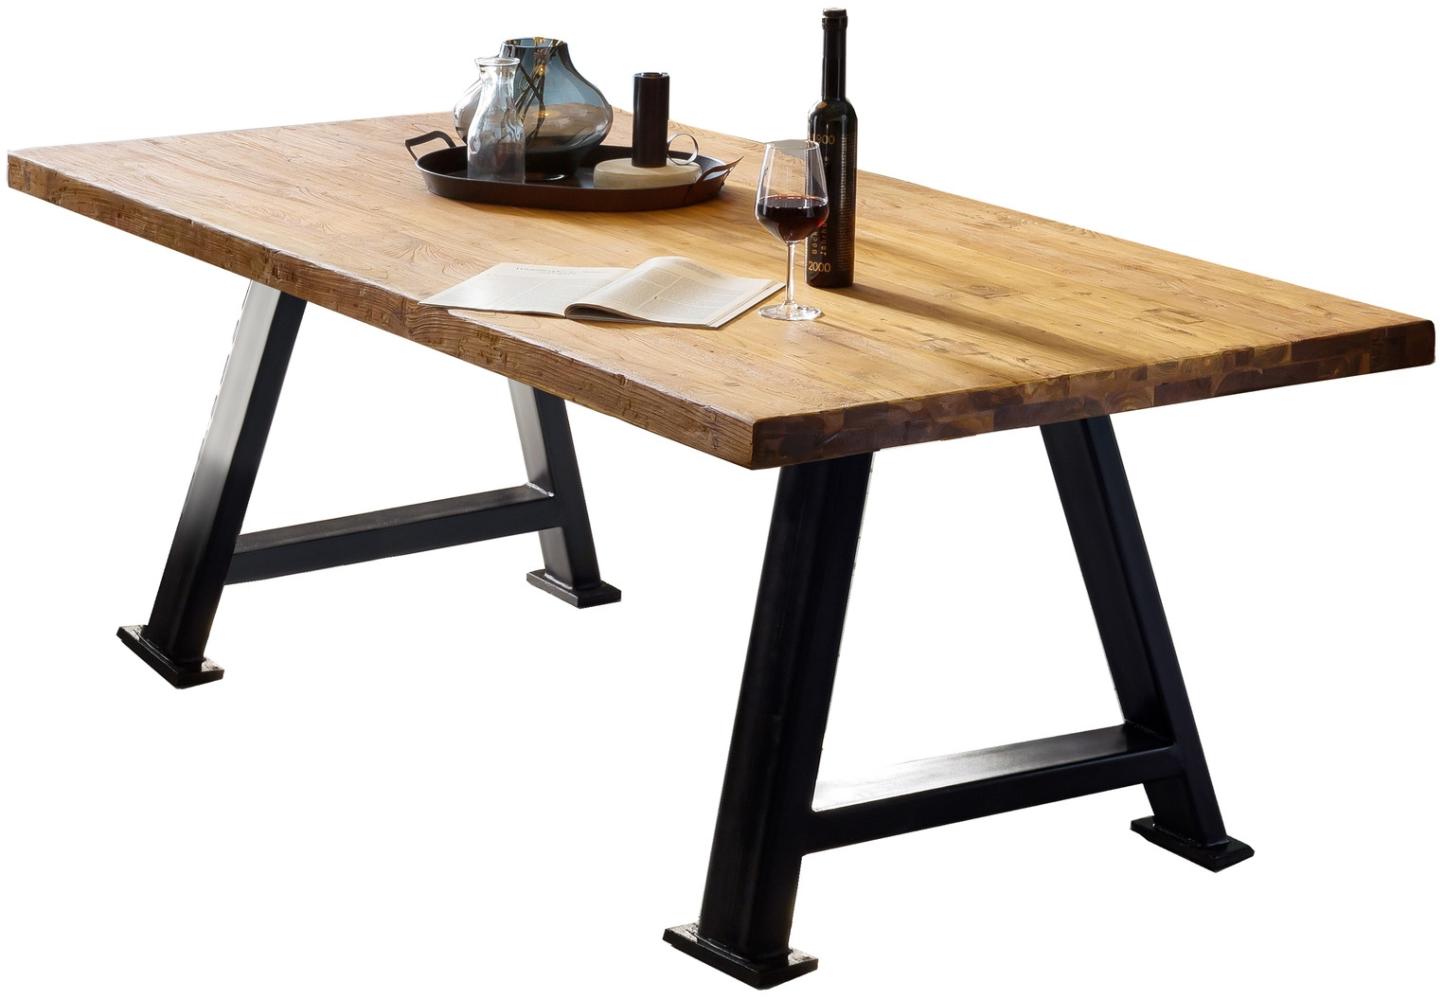 Sit Möbel Tables & Co Tisch 220x100 cm, recyceltes Teak L = 220 x B = 100 x H = 76 cm natur, antikschwarz Bild 1